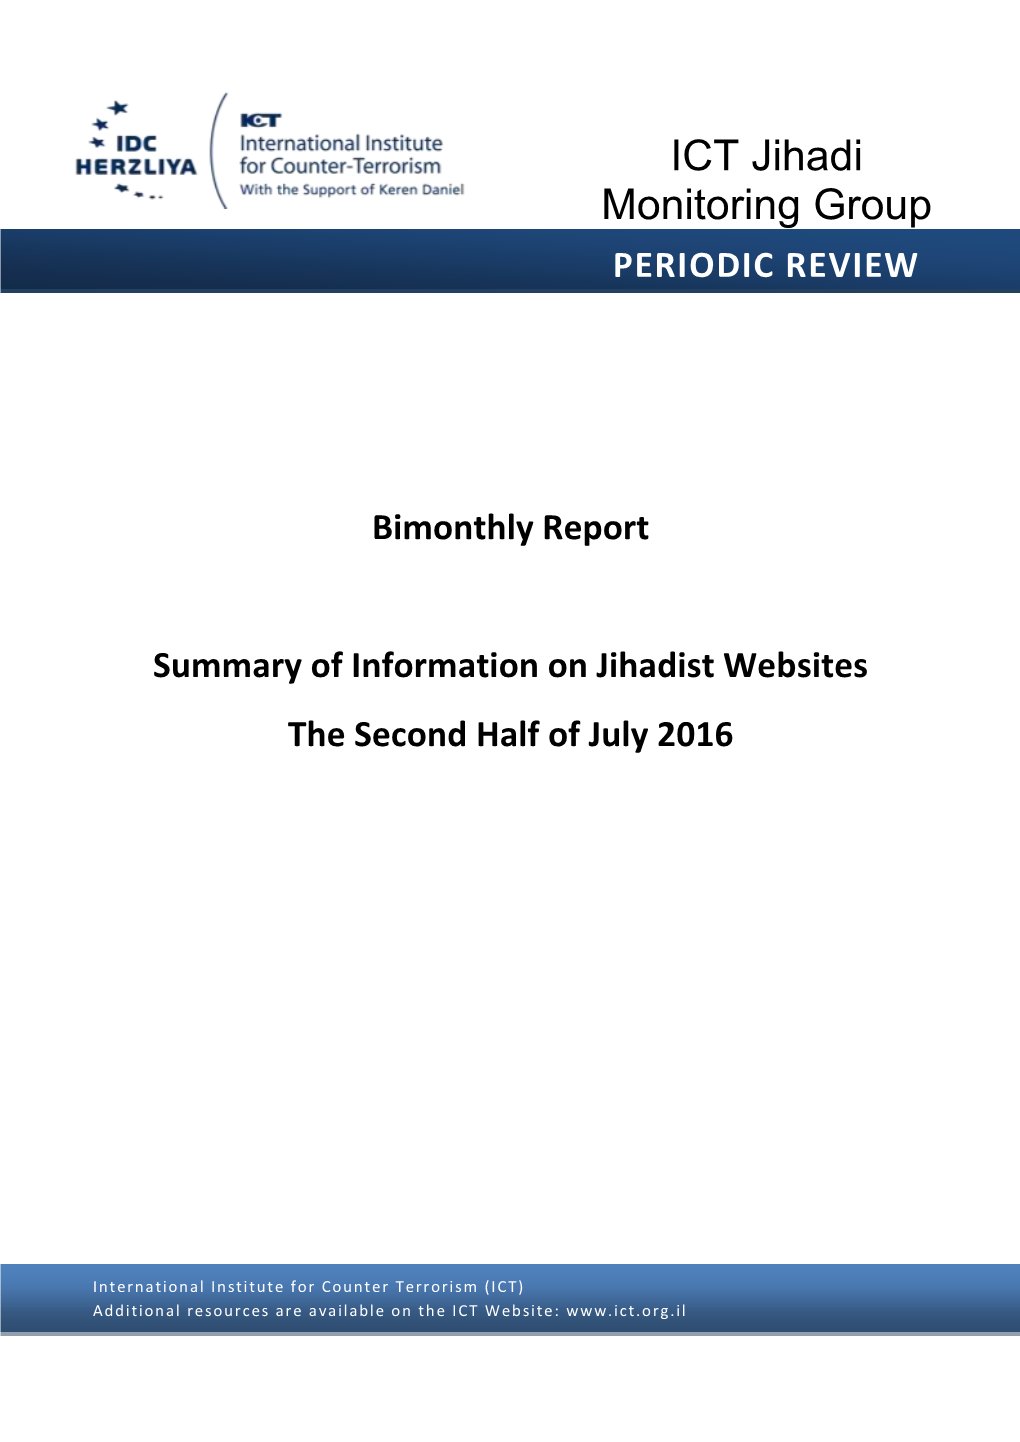 Summary of Information on Jihadist Websites the Second Half of July 2016